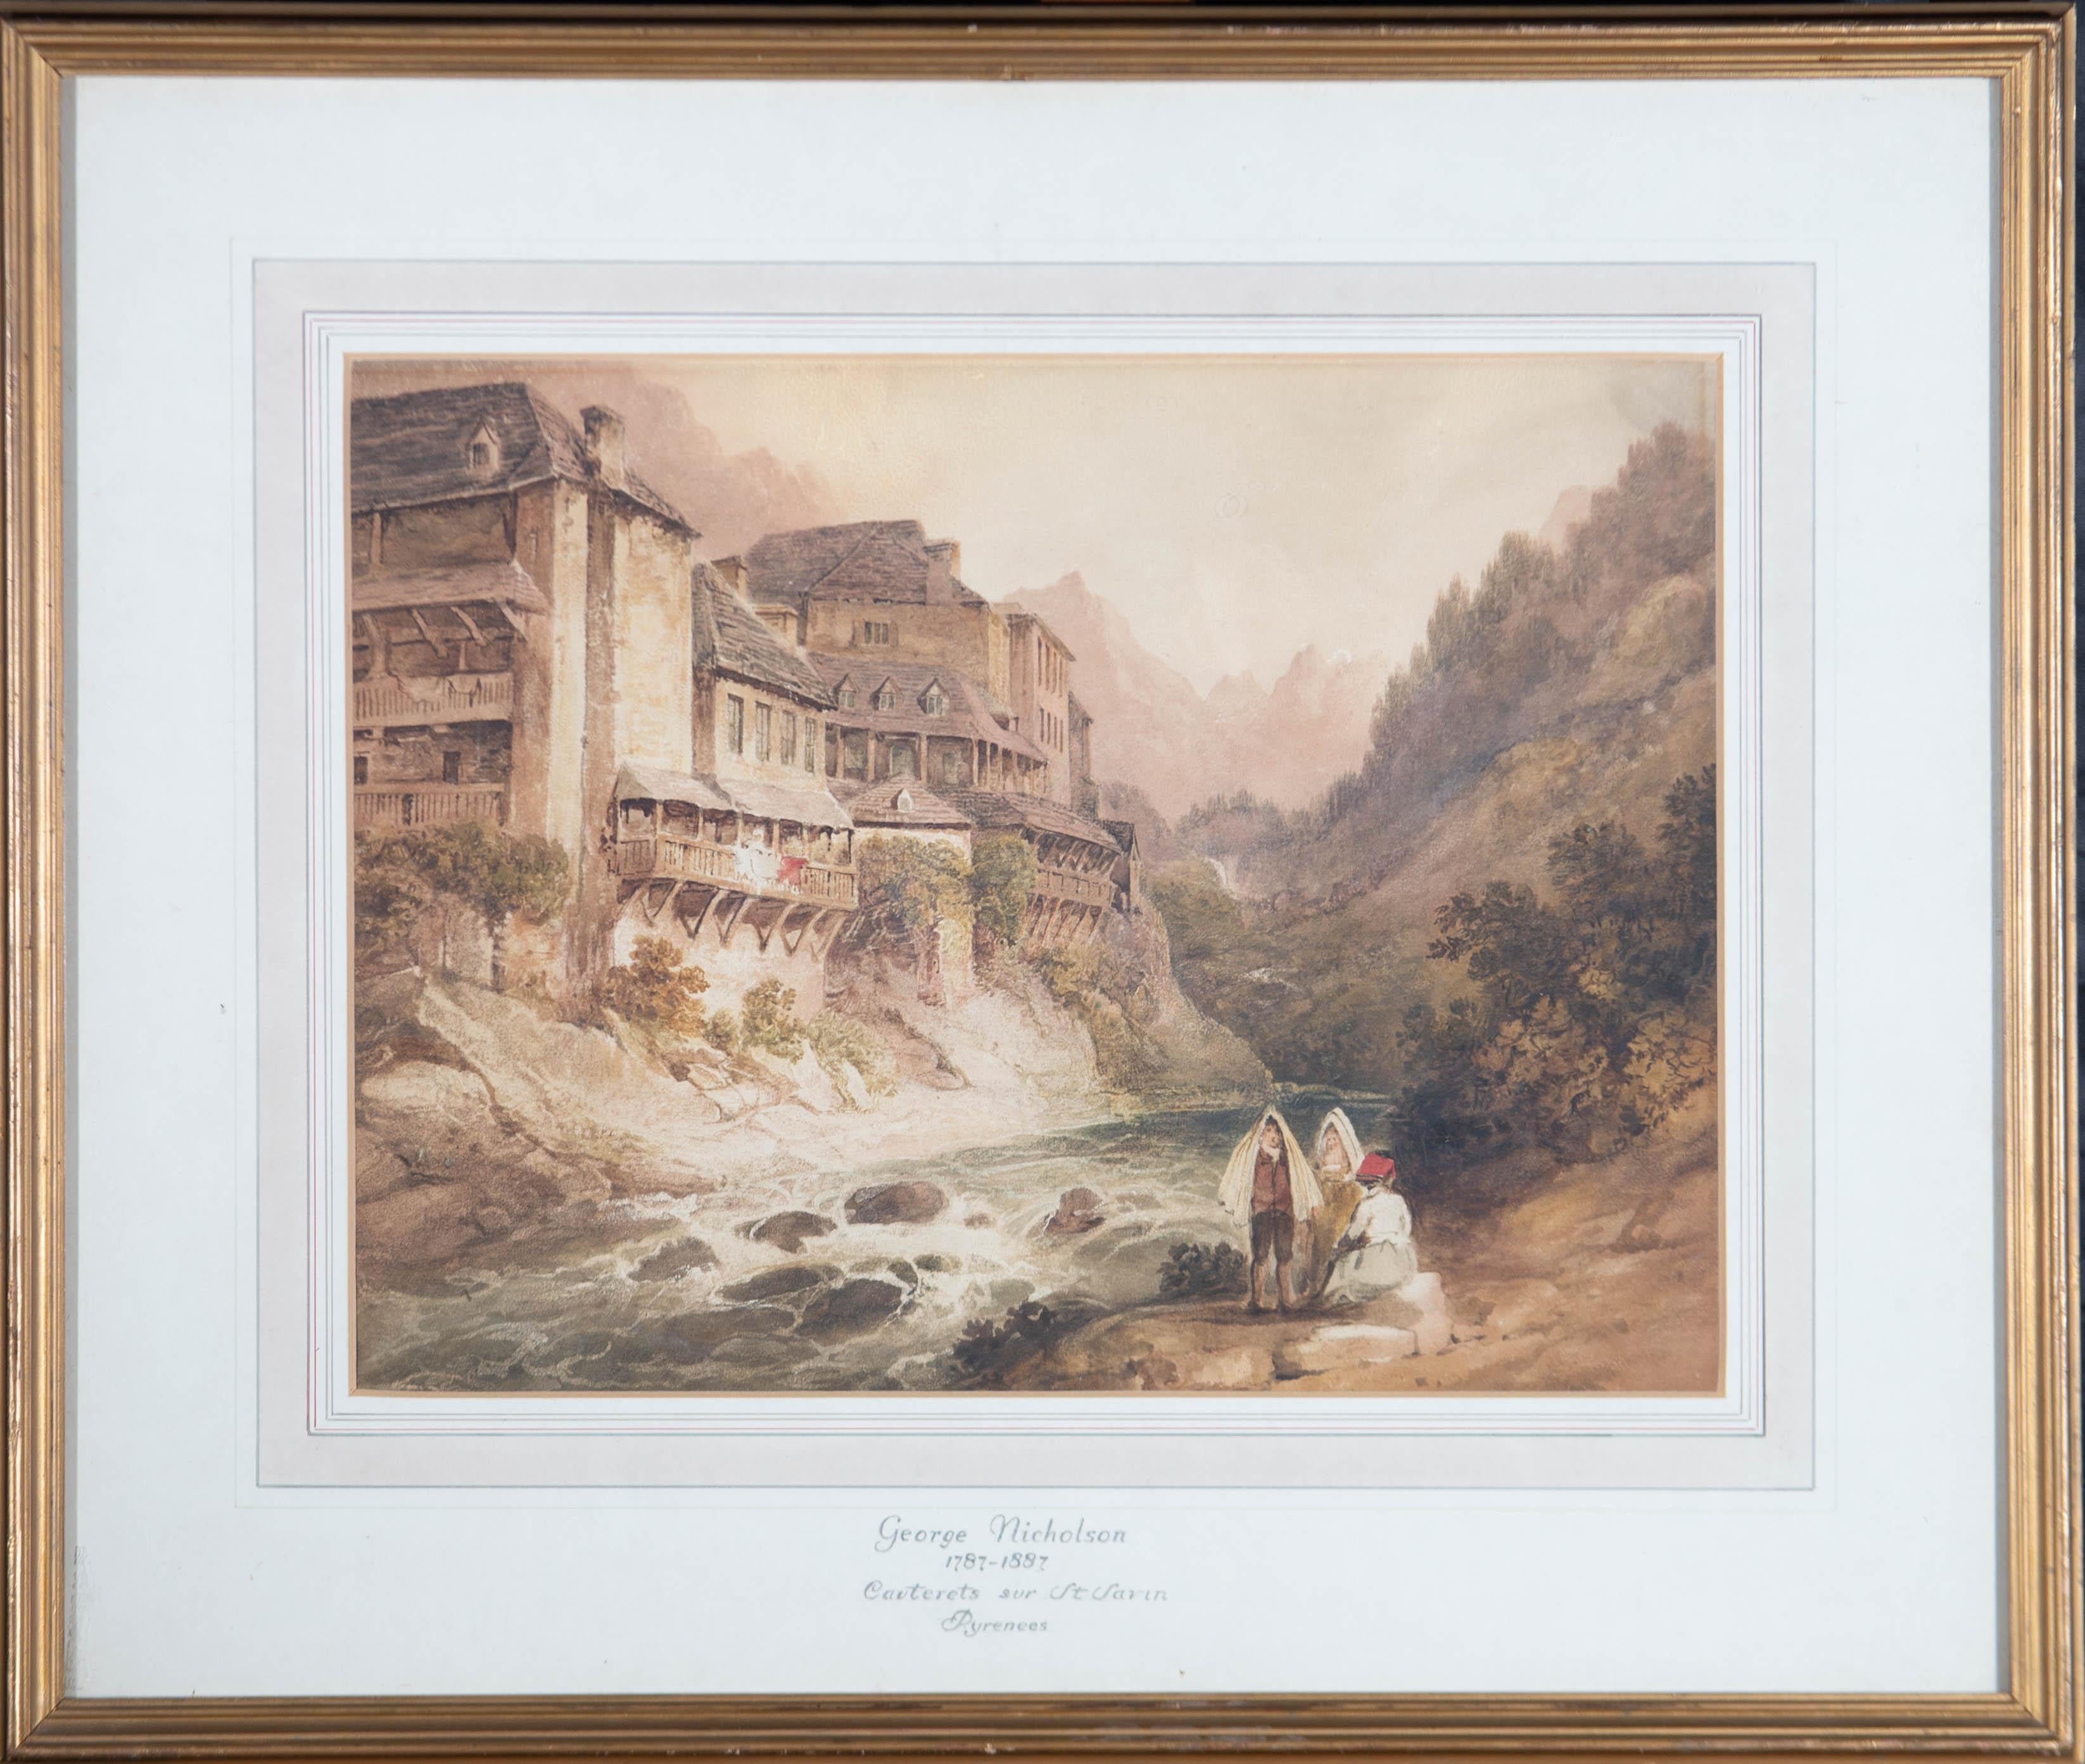  George Nicholson Landscape Art - Attrib. G. Nicholson (1787-1878) - Watercolour, Cauterets sur St Savin, Pyrenees